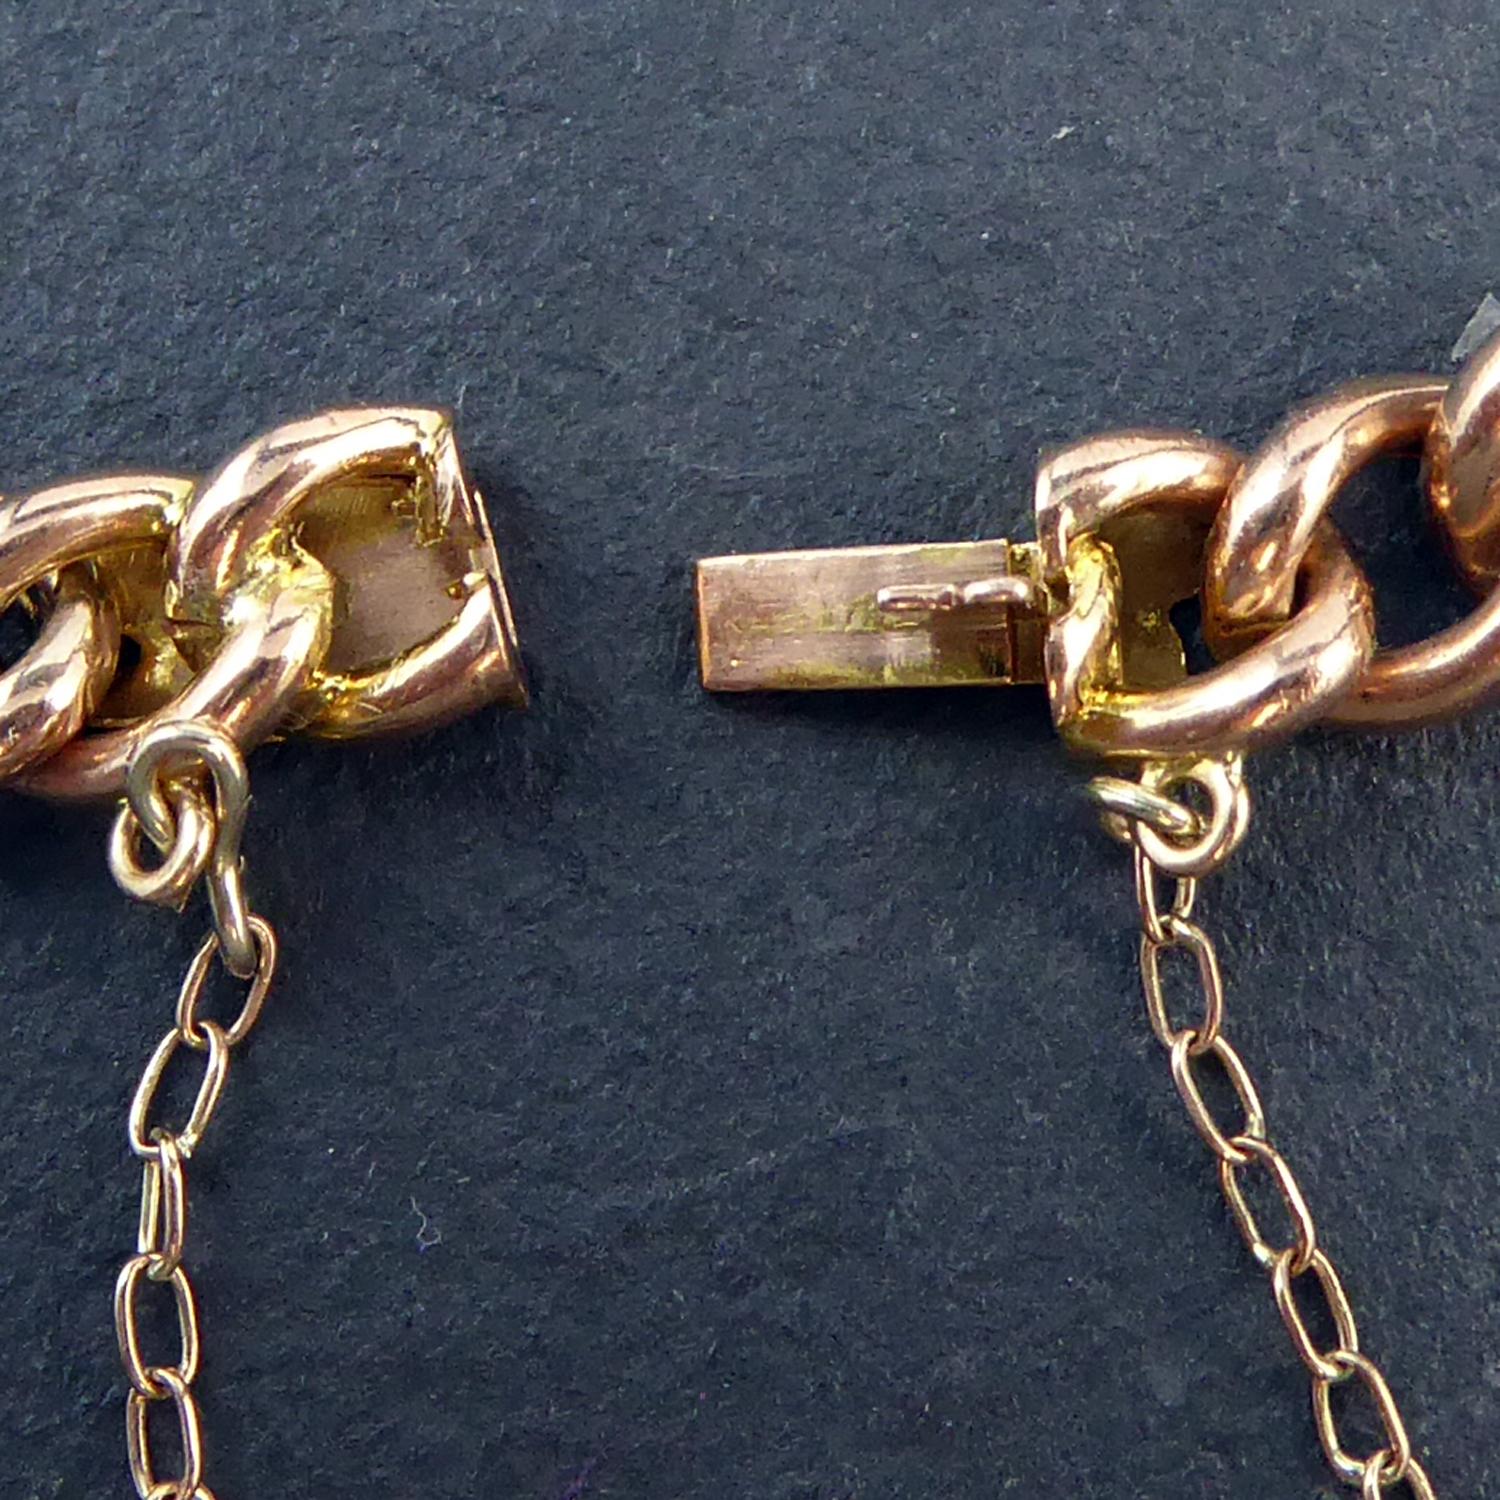 Women's Antique Edwardian Gold Curb Link Bracelet with Cabochon Opals